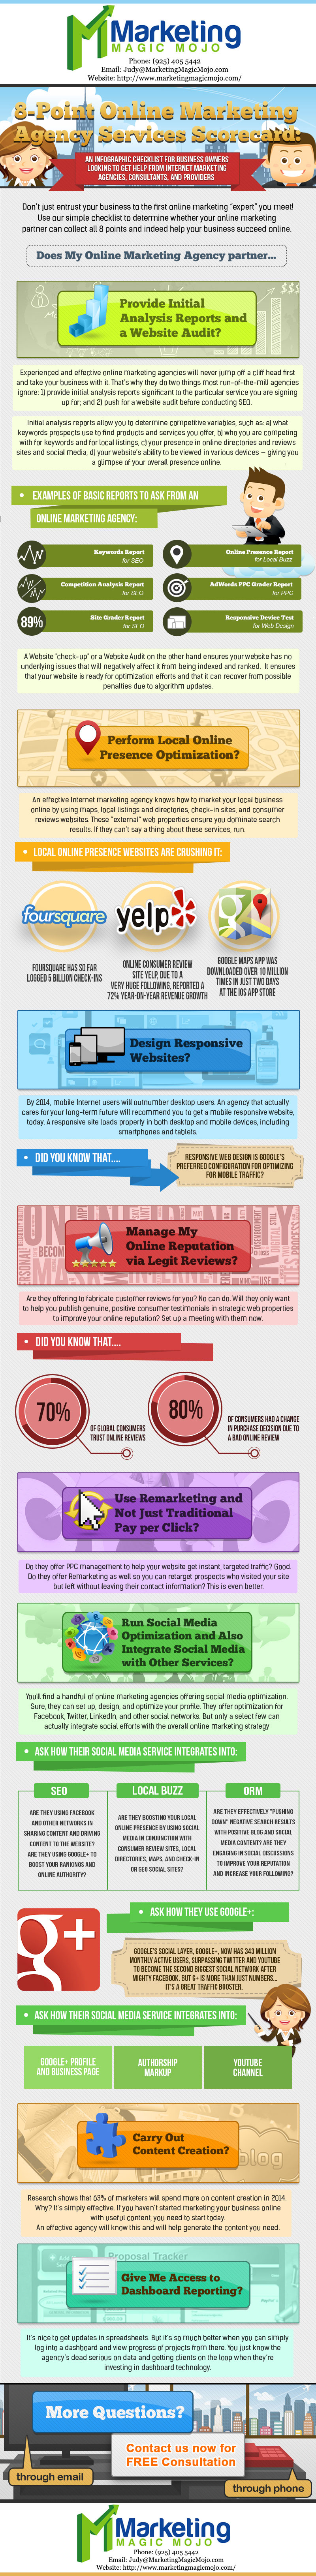 MarketingMagicMojo.com-Infographic-Overview